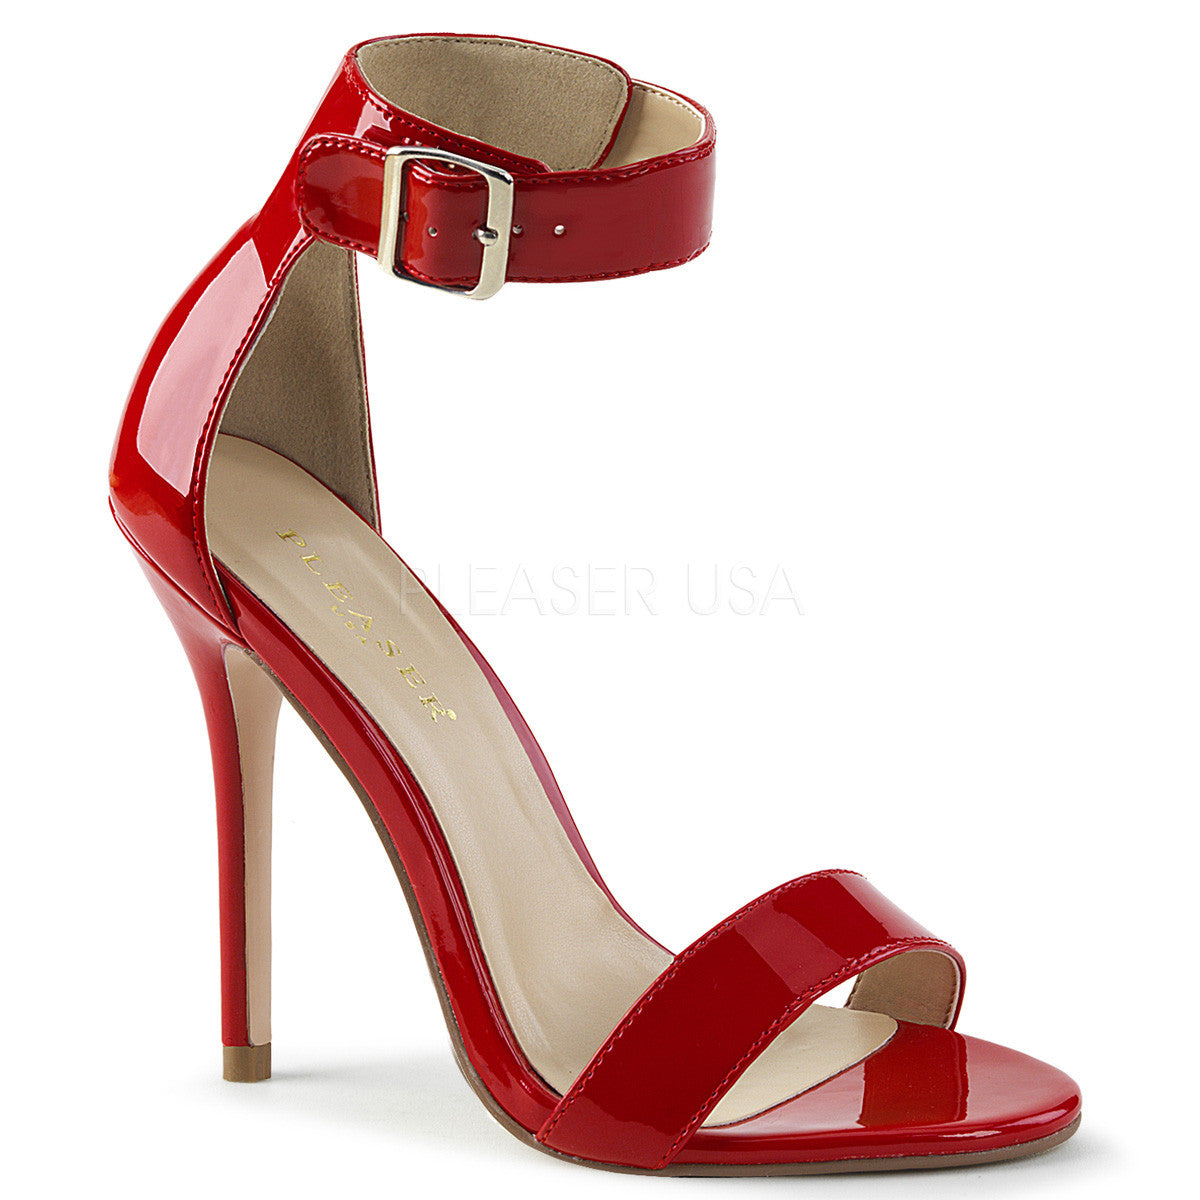 5" Heel AMUSE-10 Red Ankle Strap Sandal